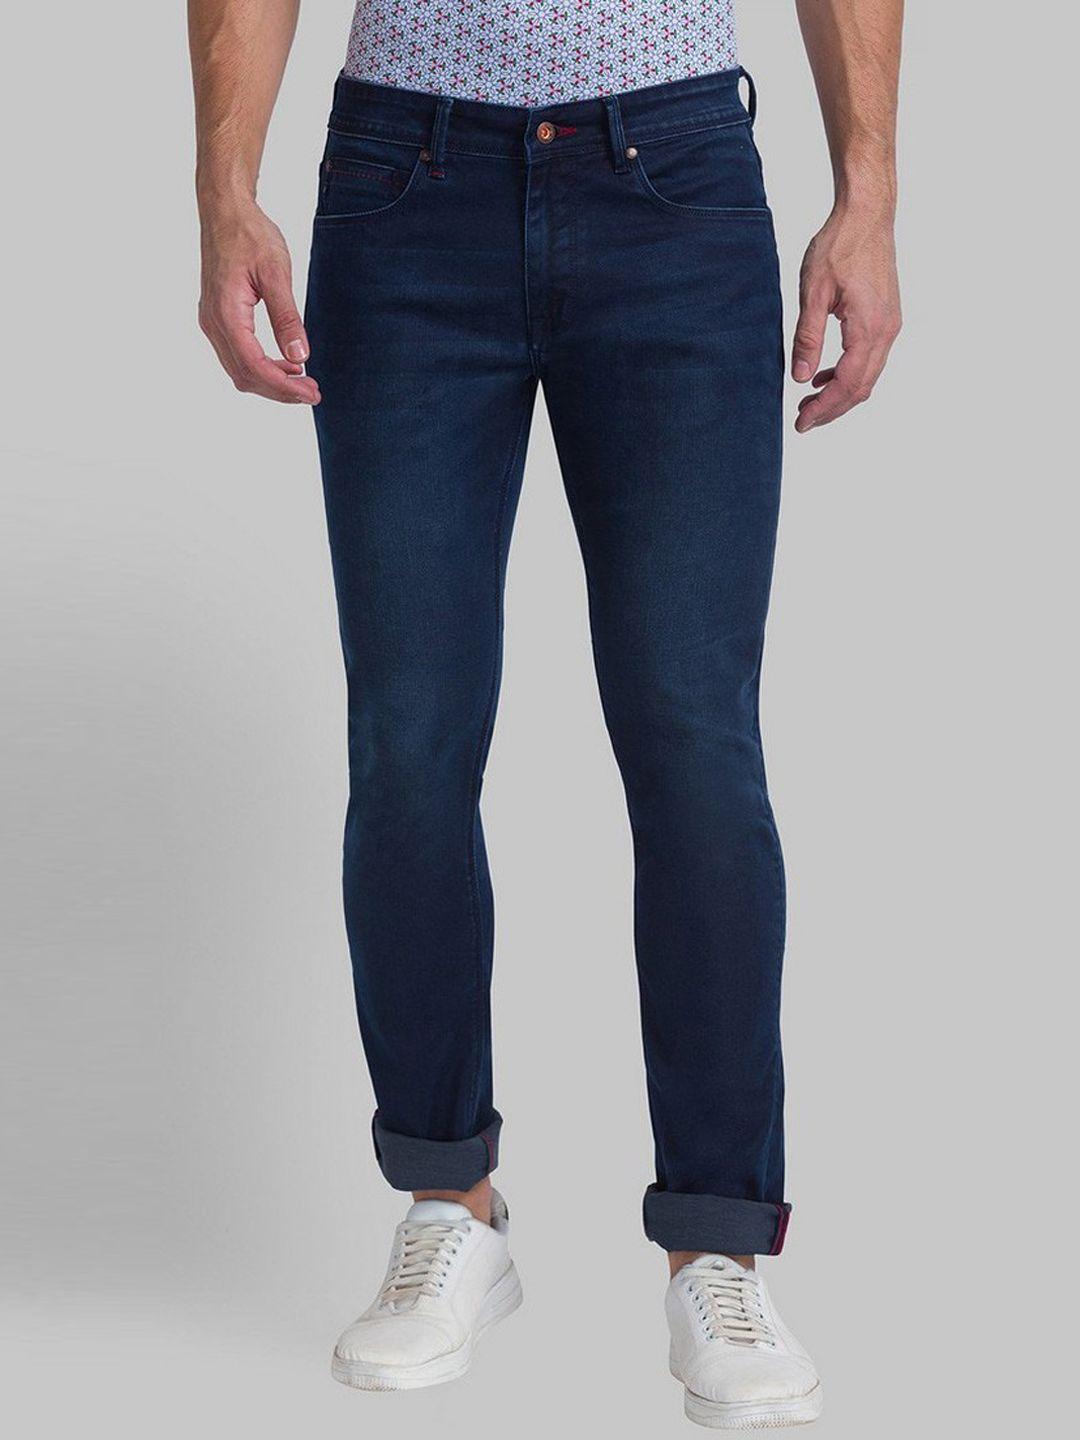 raymond-men-slim-fit-light-fade-jeans